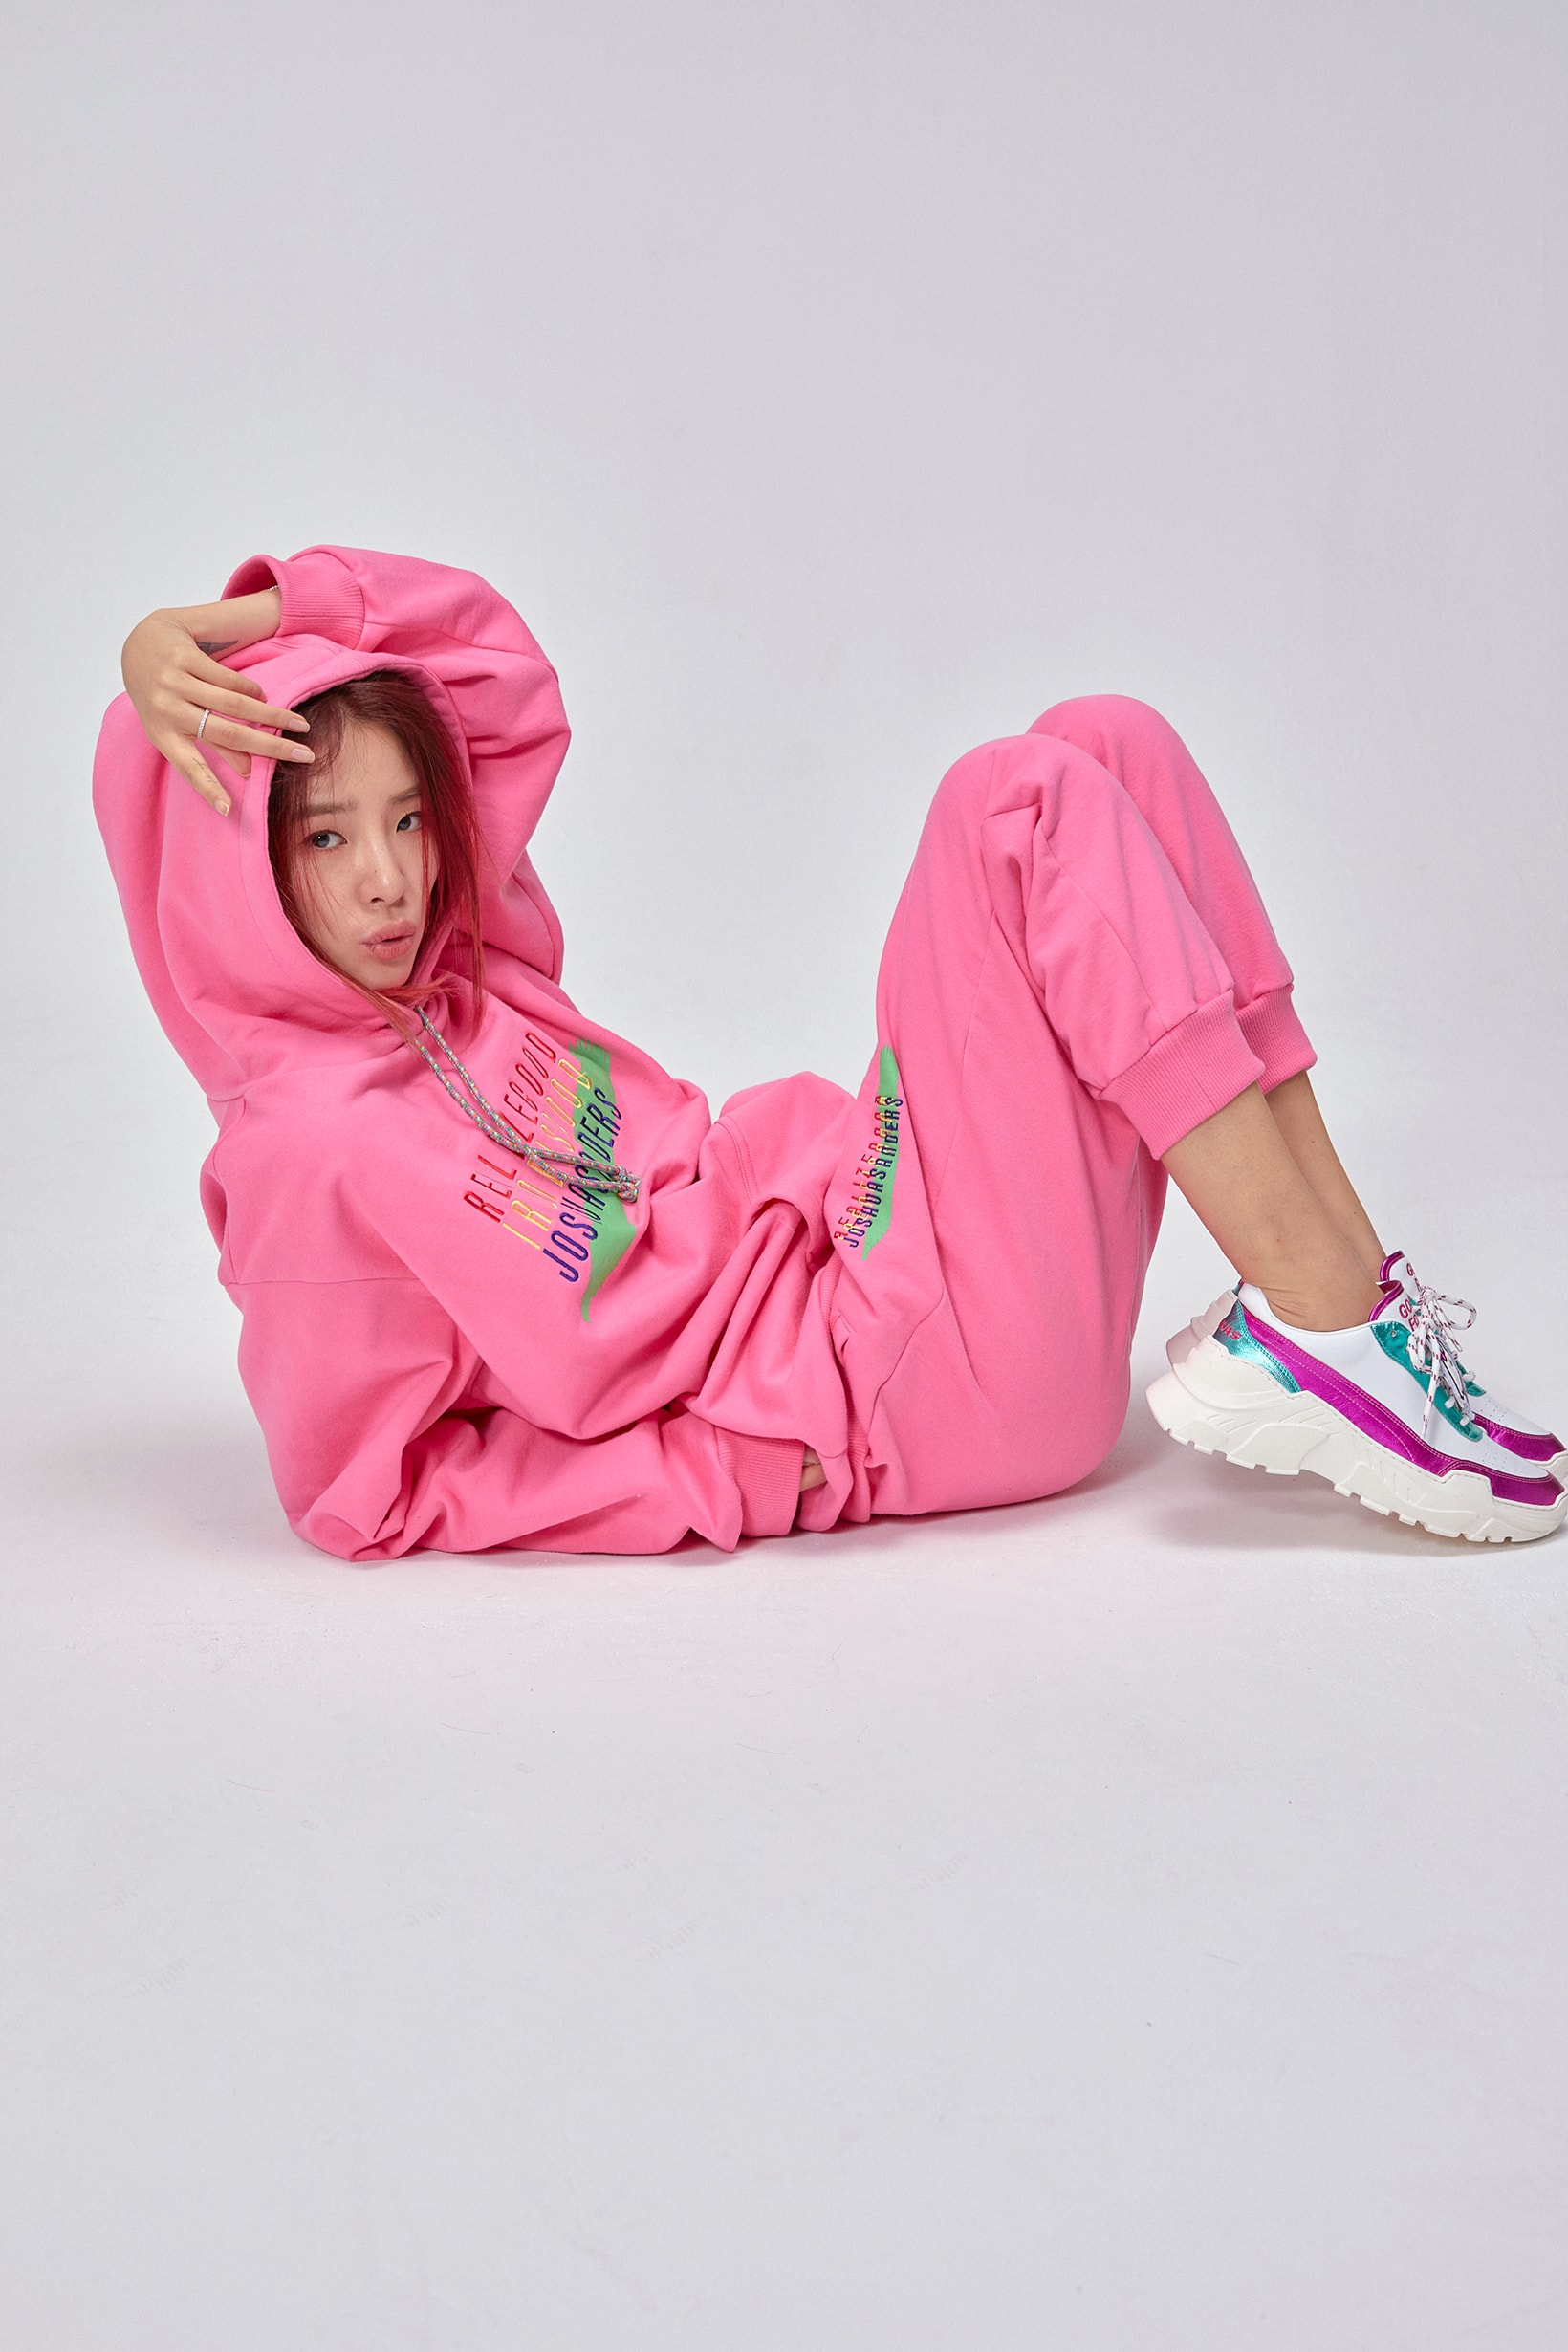 Irene Kim x Joshua Sanders Zenith Sneaker Unicorn Collaboration Apparel